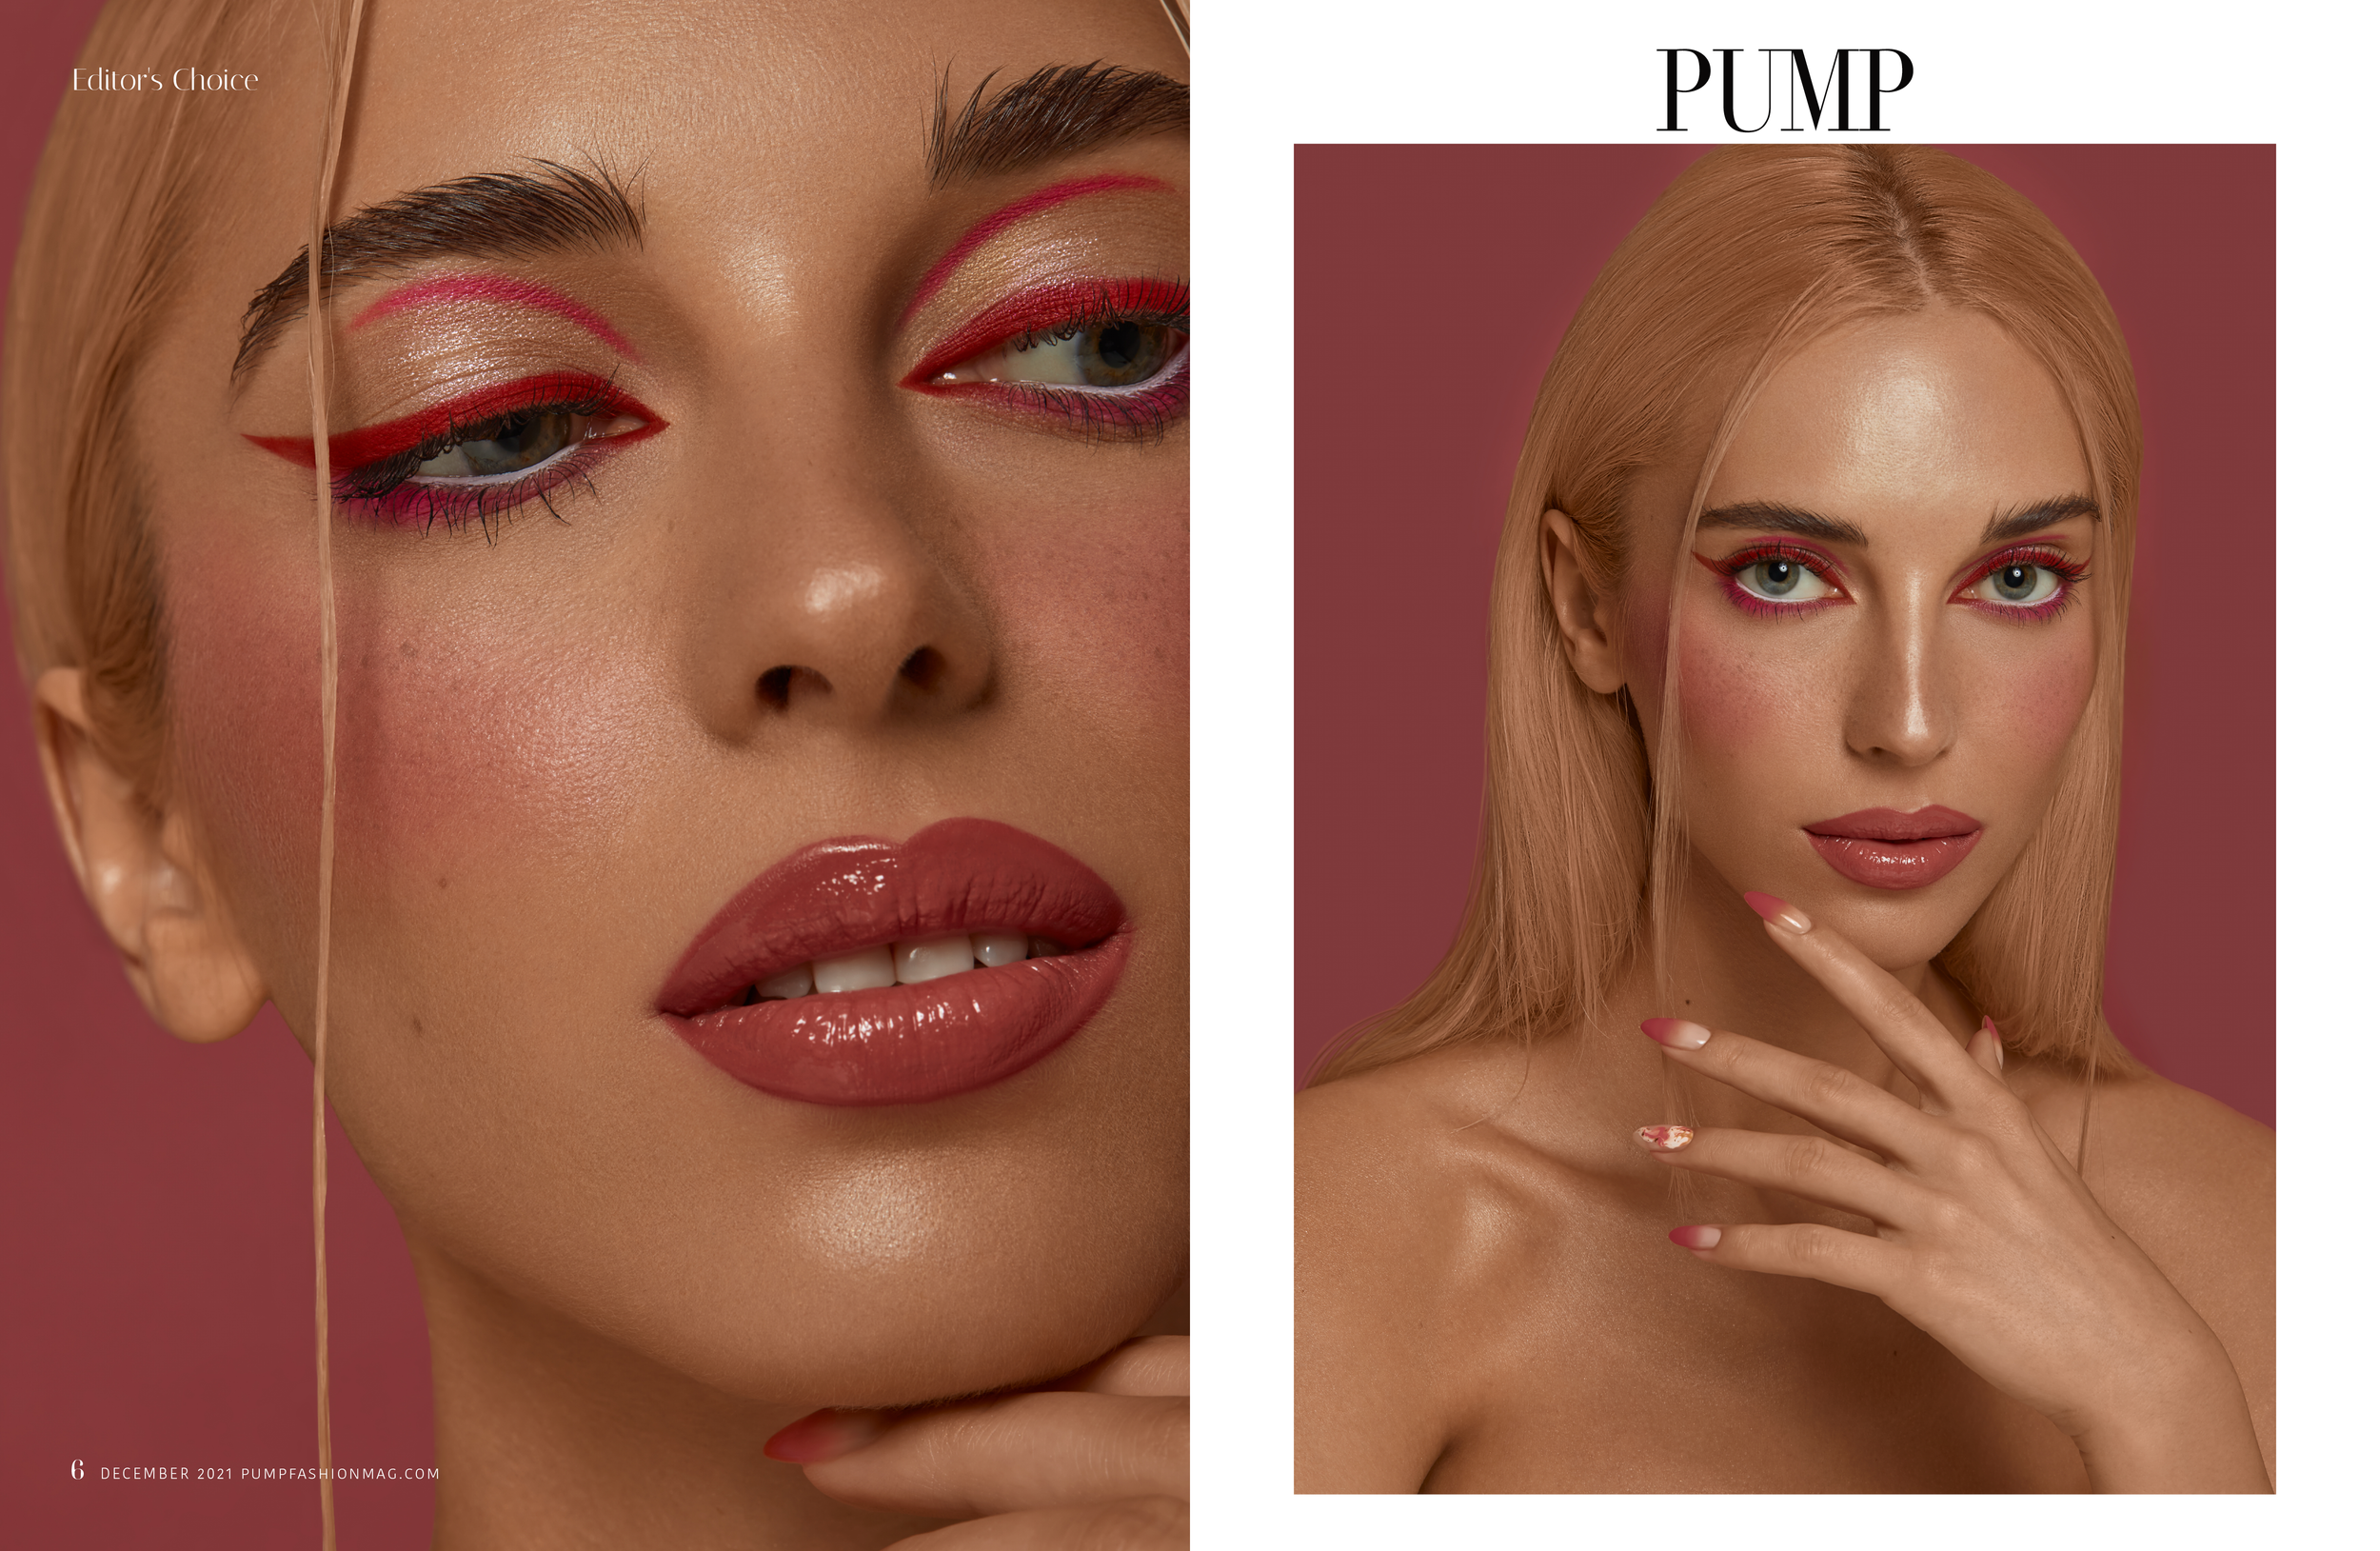 PUMP Magazine %7C The Vintage Fashion %26 Beauty Edition %7C Editor%27s Choice %7C Vol.2 %7C December 20214.png